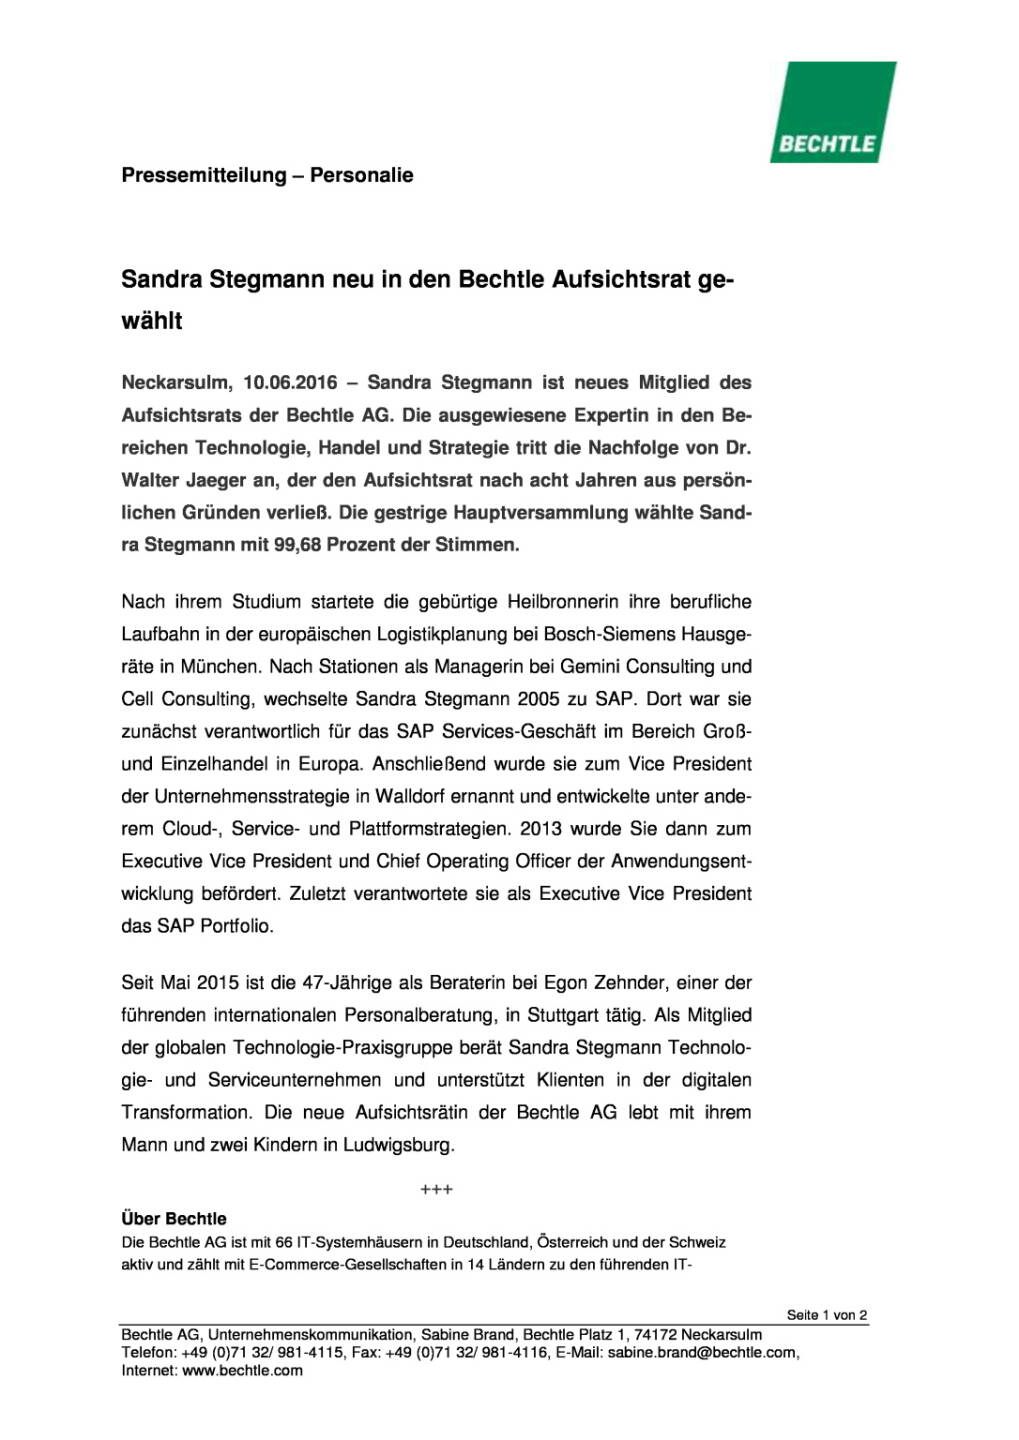 Bechtle AG: Sandra Stegmann in den Aufsichtsrat gewählt , Seite 1/2, komplettes Dokument unter http://boerse-social.com/static/uploads/file_1193_bechtle_ag_sandra_stegmann_in_den_aufsichtsrat_gewahlt.pdf